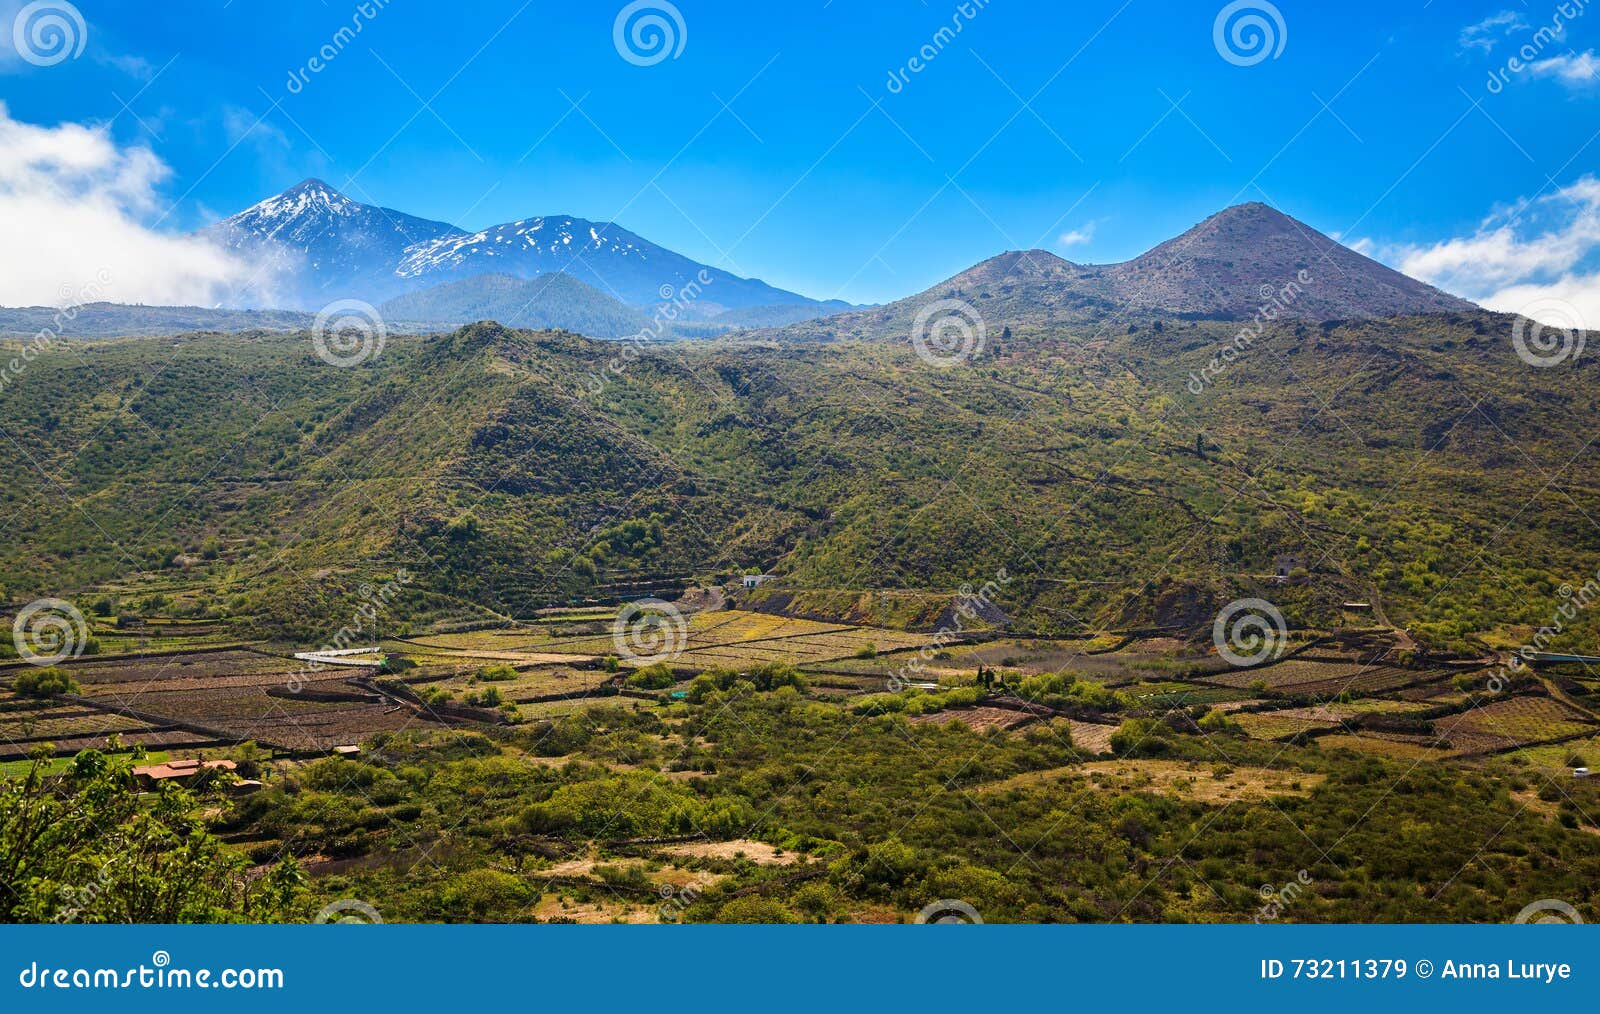 valle de arriba with mount teide in a distance